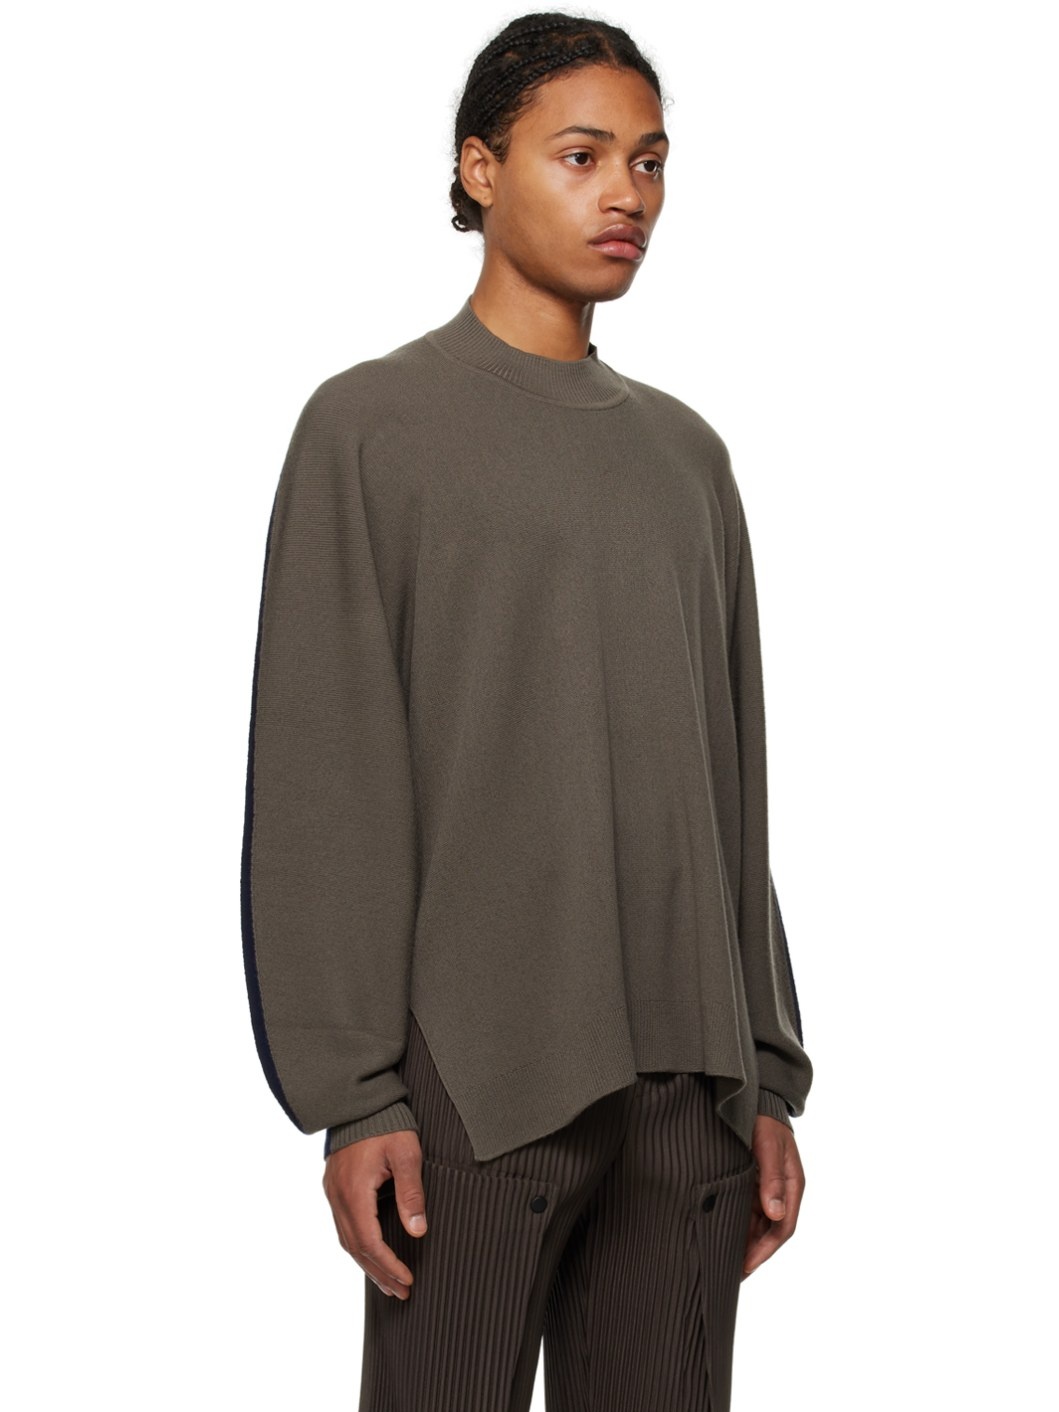 Khaki Framework Sweater - 2